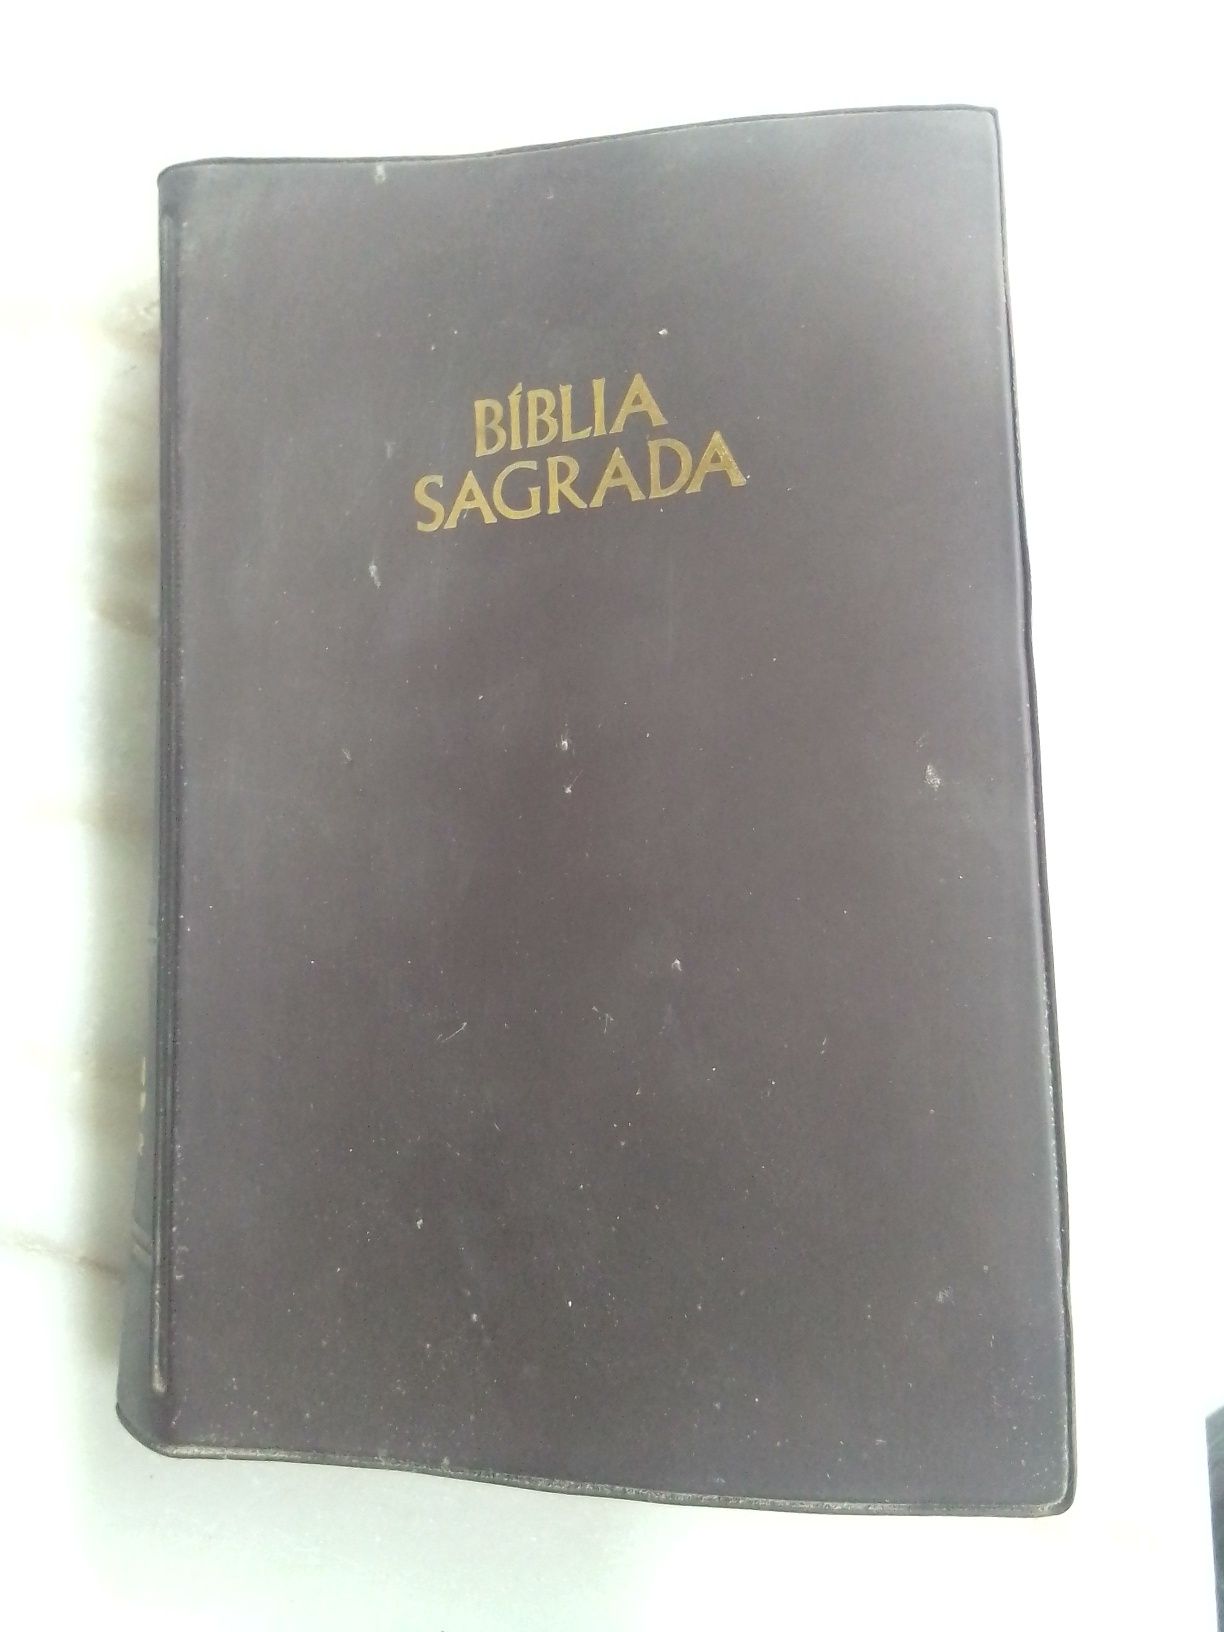 Bíblia sagrada antiga capa preta só 15€